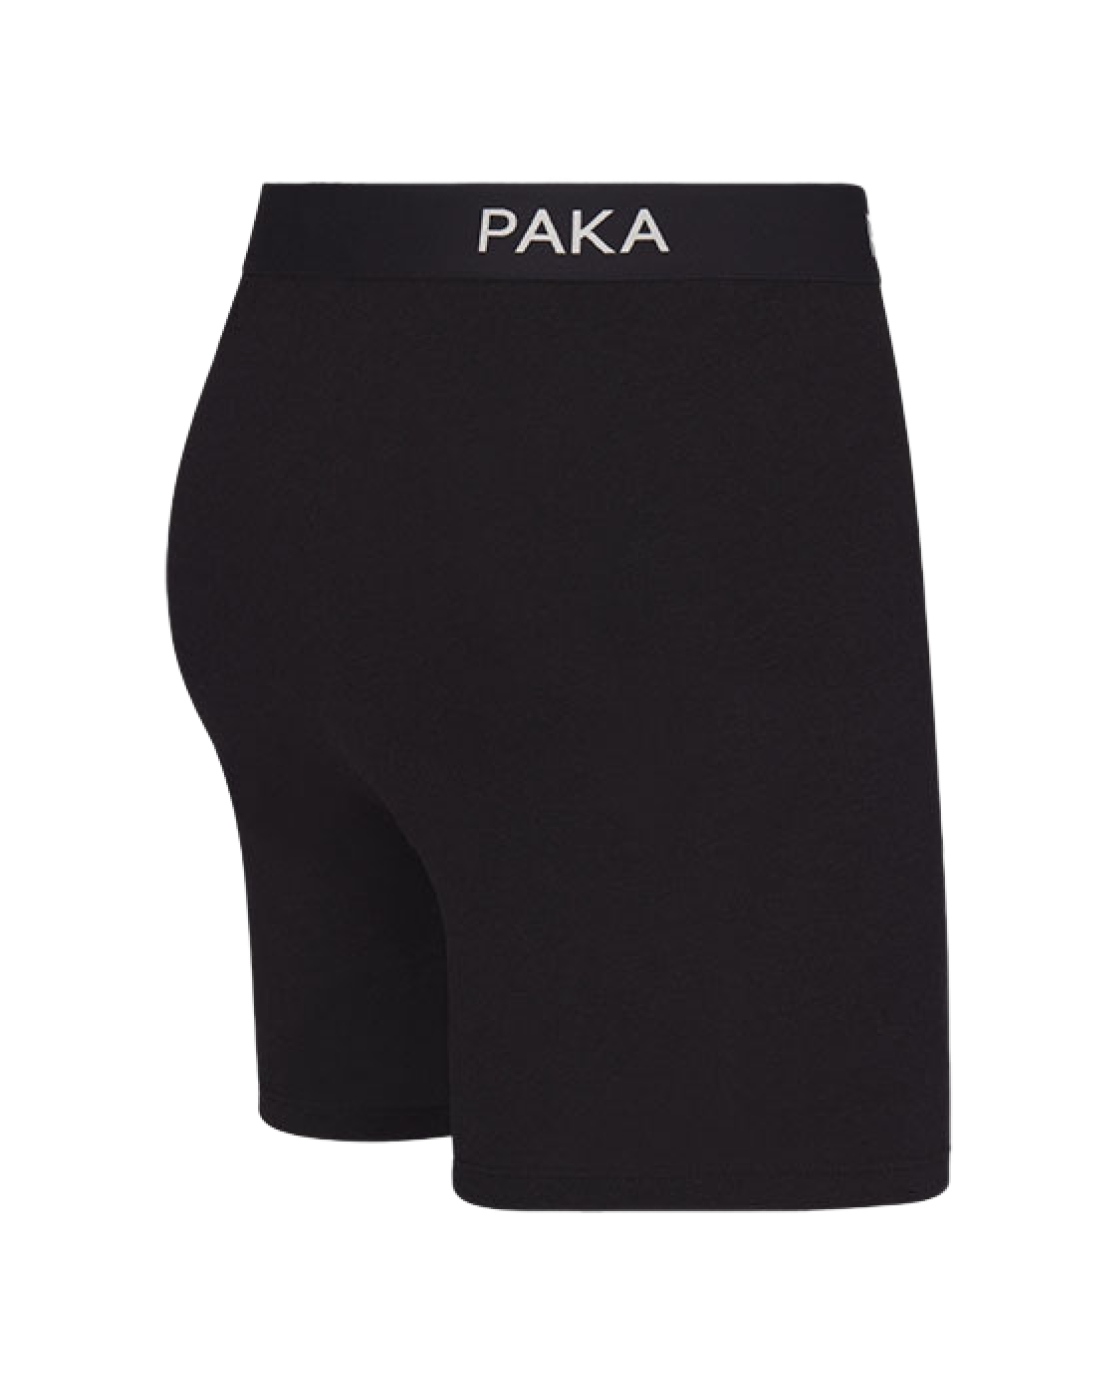 A Men's alpaca underwear in black